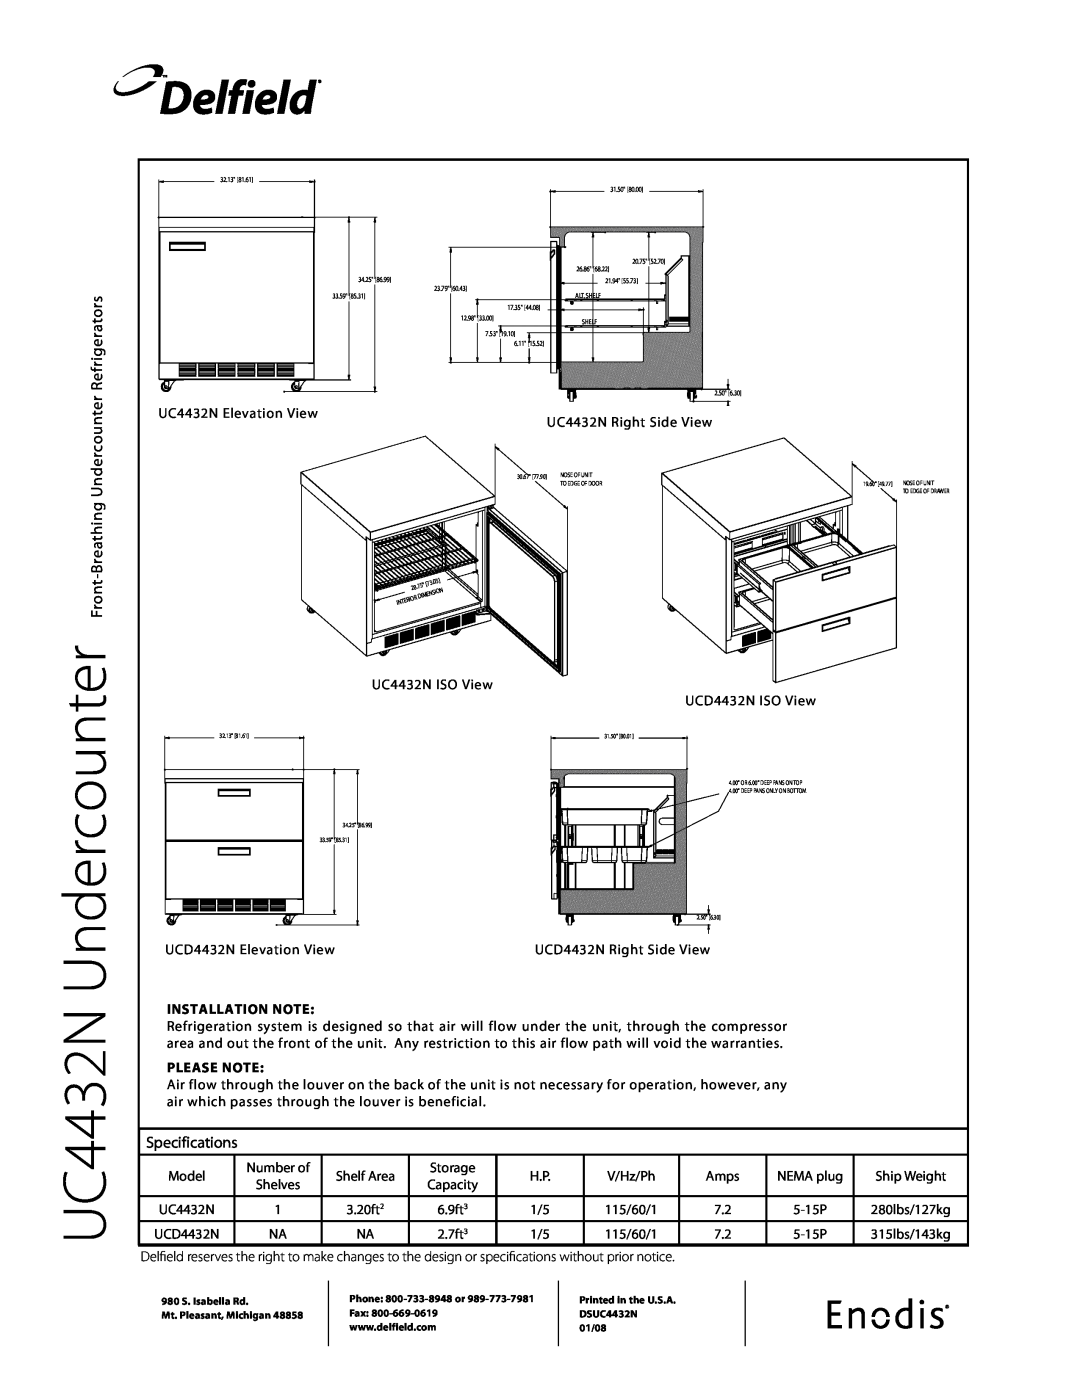 Delfield UC4432N Front-Breathing Undercounter Refrigerators, Specifications, Delfield, Installation Note, Please Note 